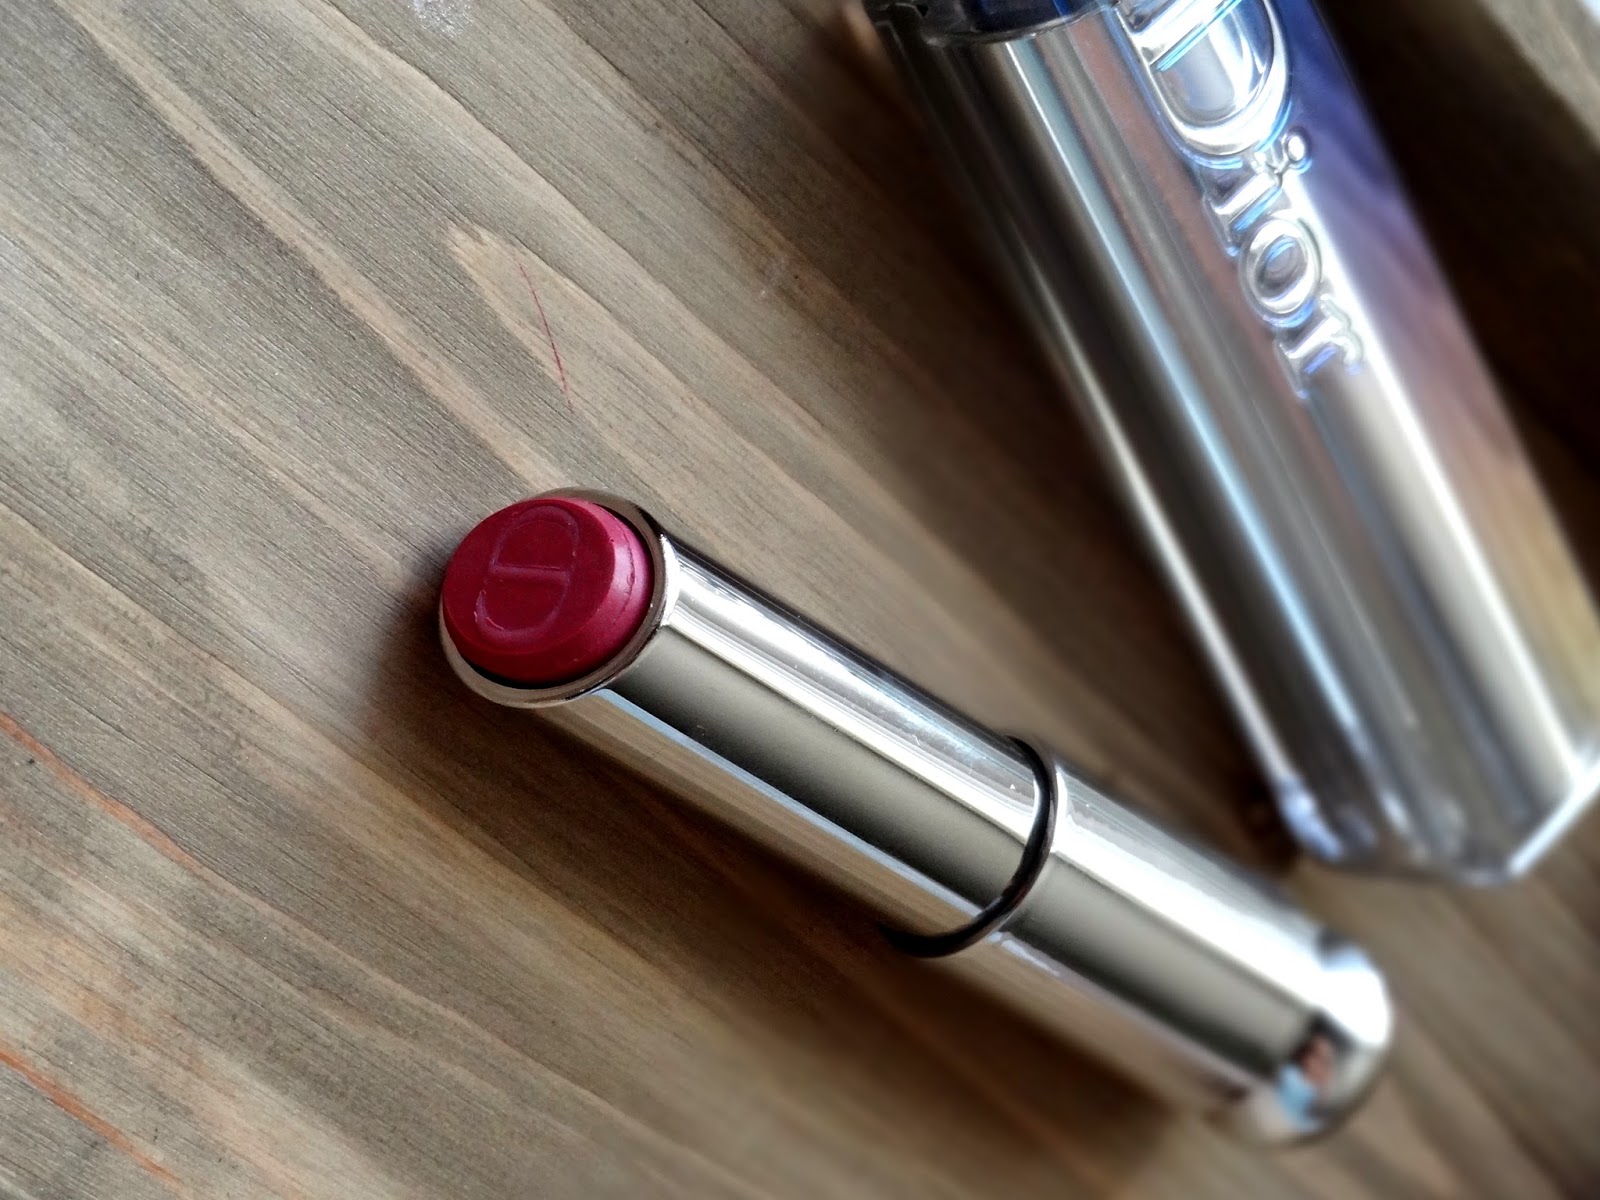 dior addict lipstick 780